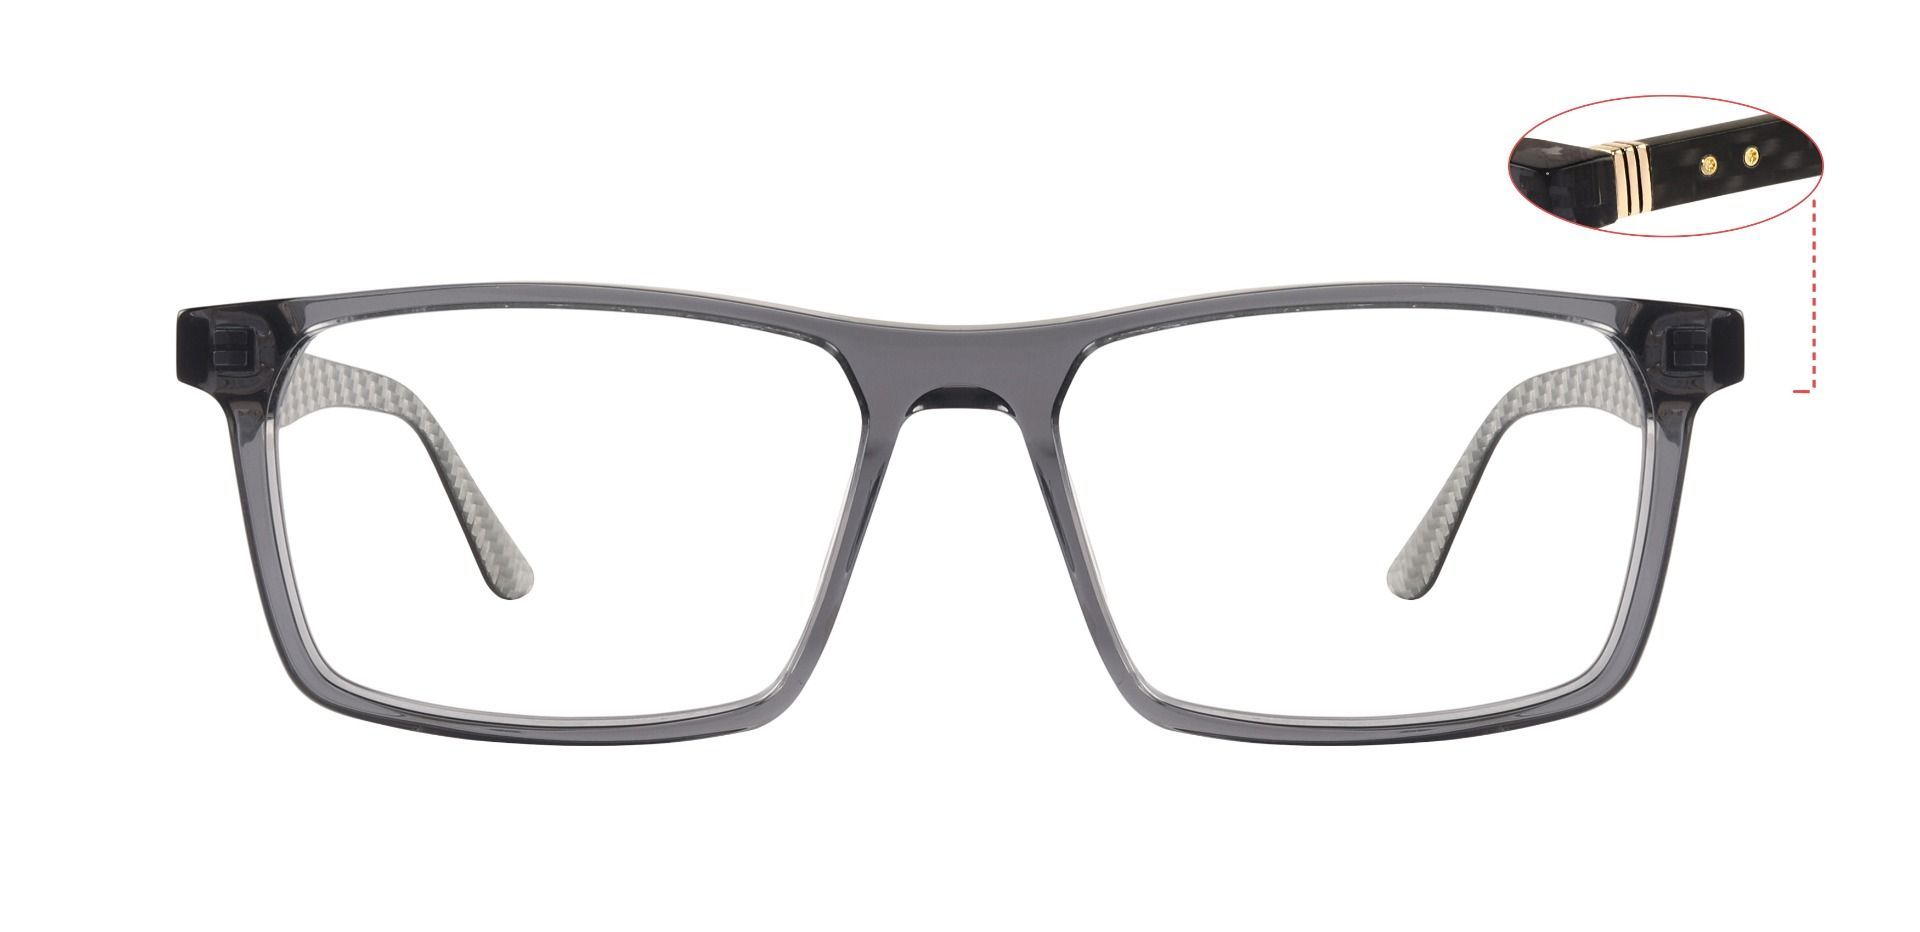 Steven Rectangle Prescription Glasses Blackcarbon Fiber Temples Mens Eyeglasses Payne 